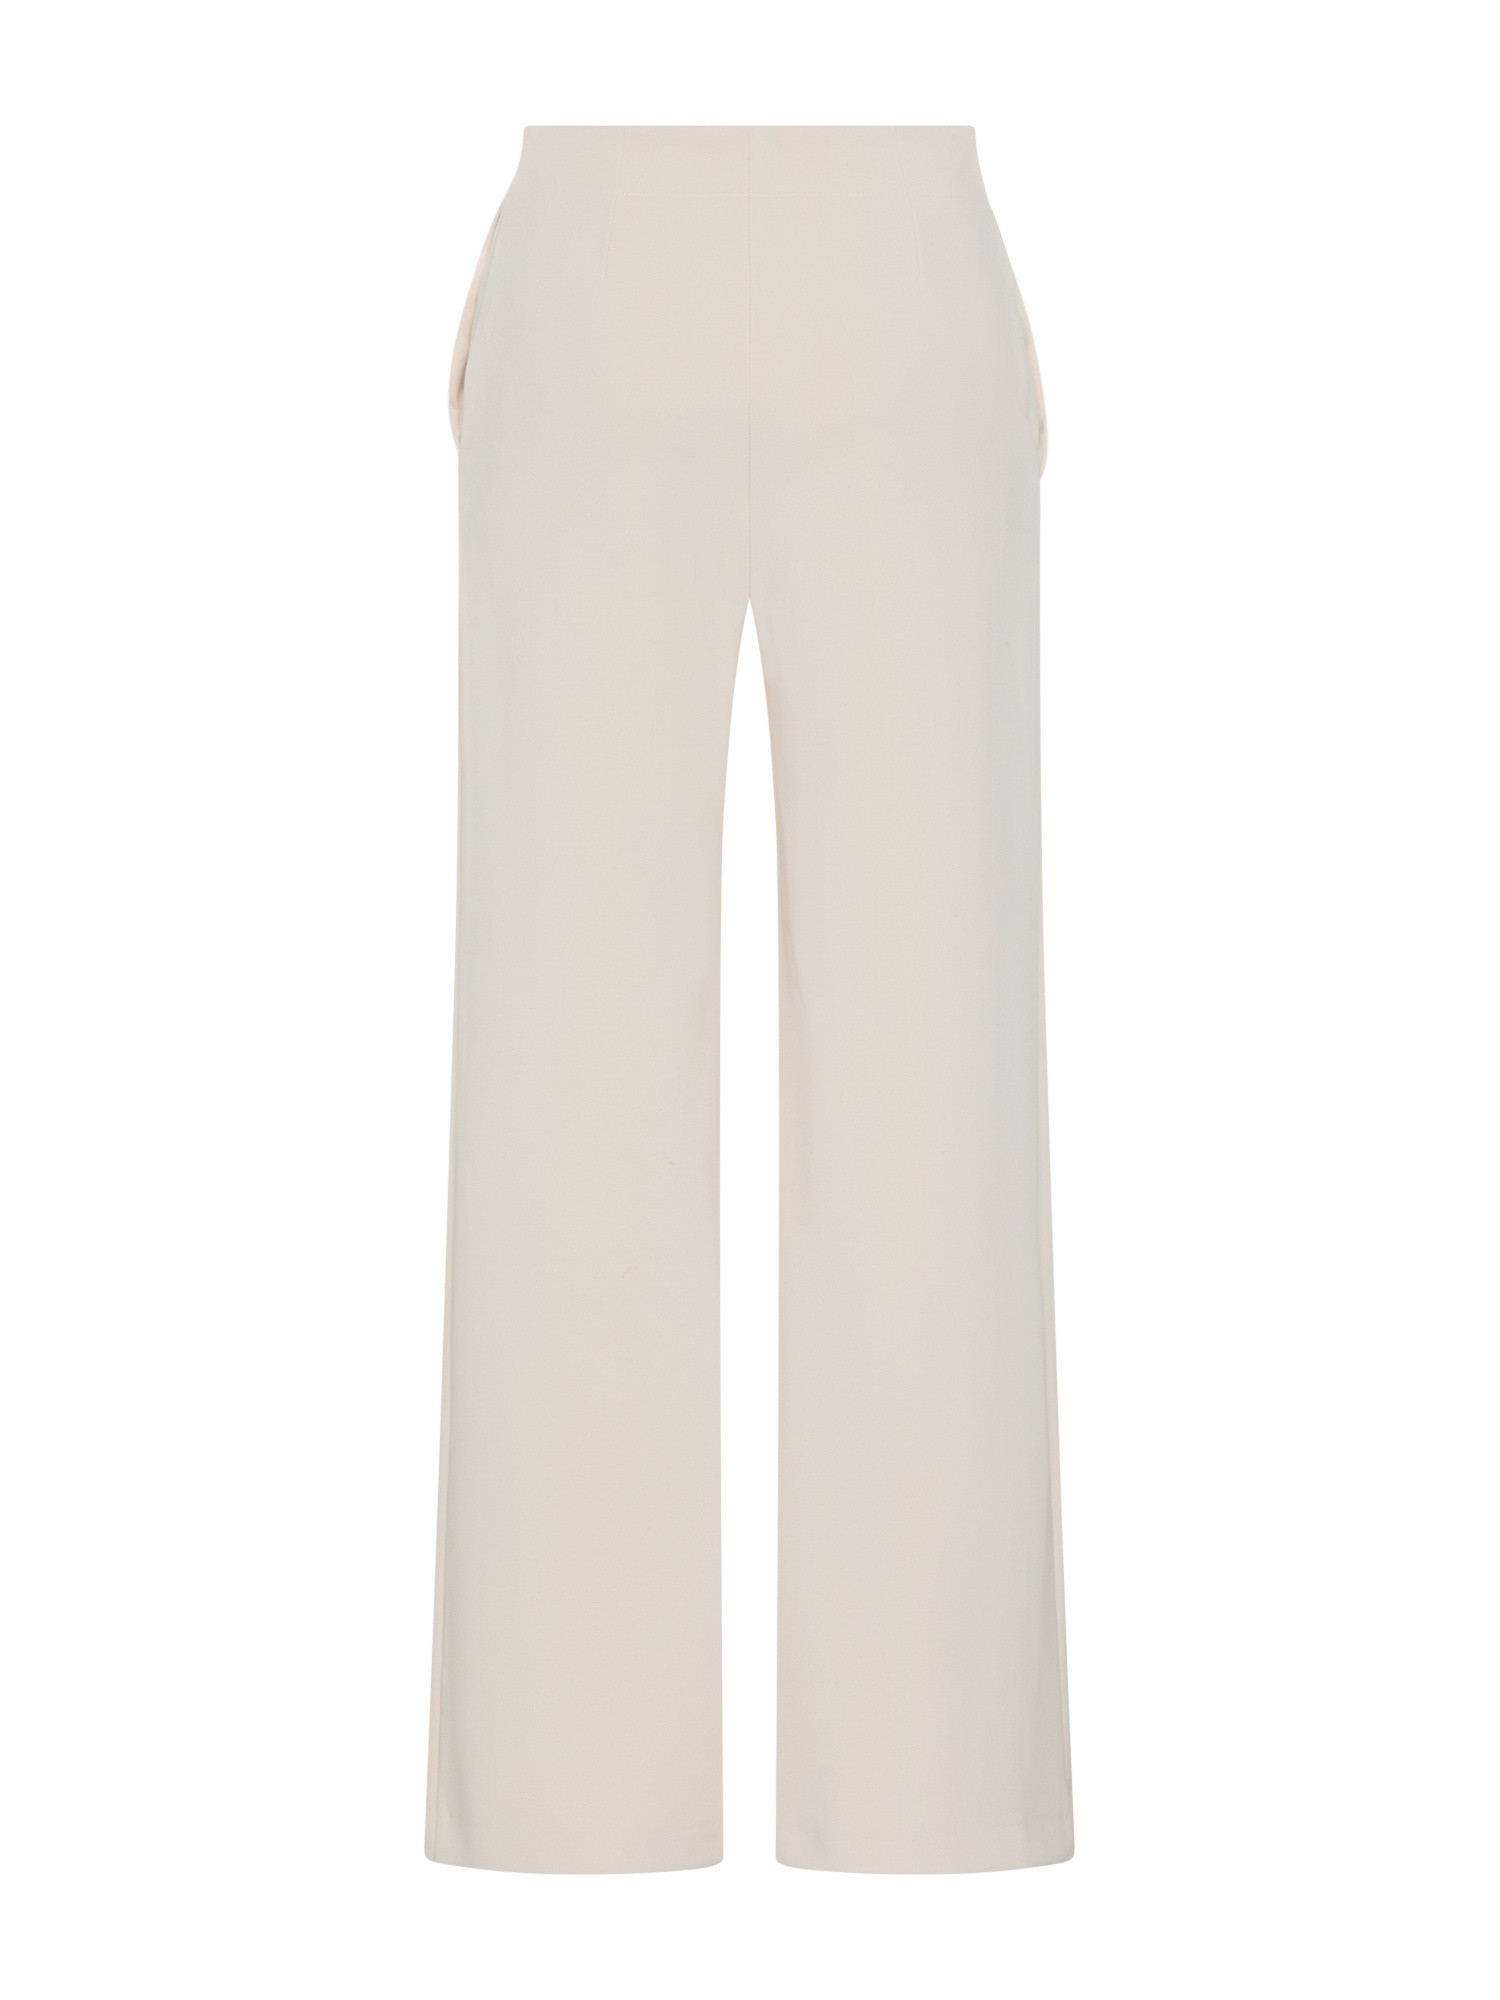 Koan - Wide leg trousers, Cream, large image number 1